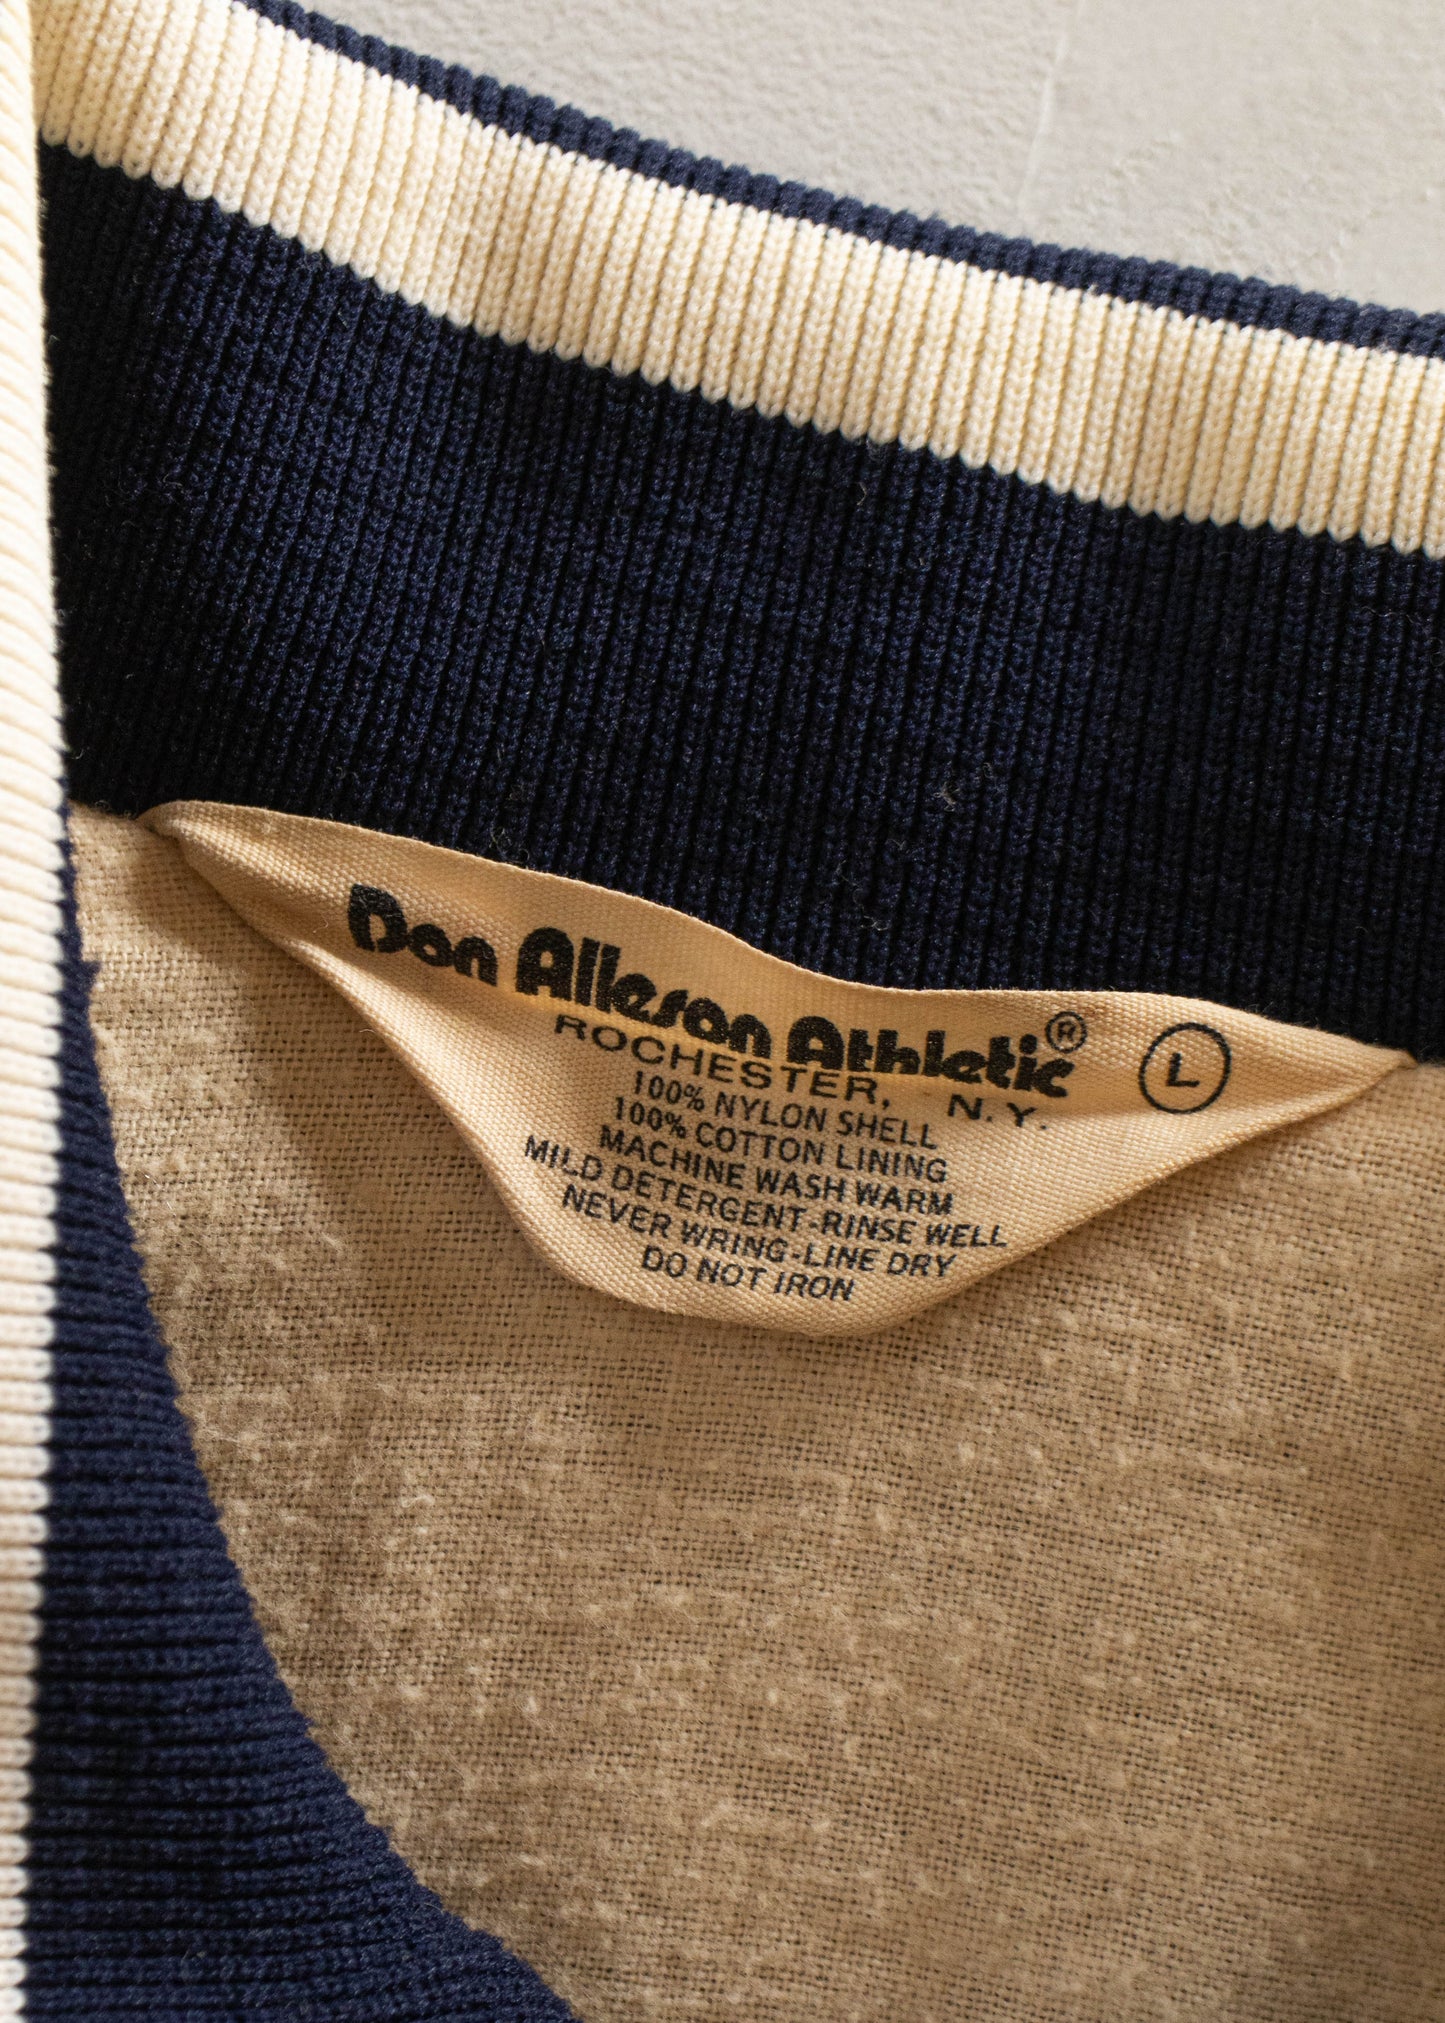 1980s Don Alleson Athletic Softball Association Nylon Bomber Jacket Size M/L